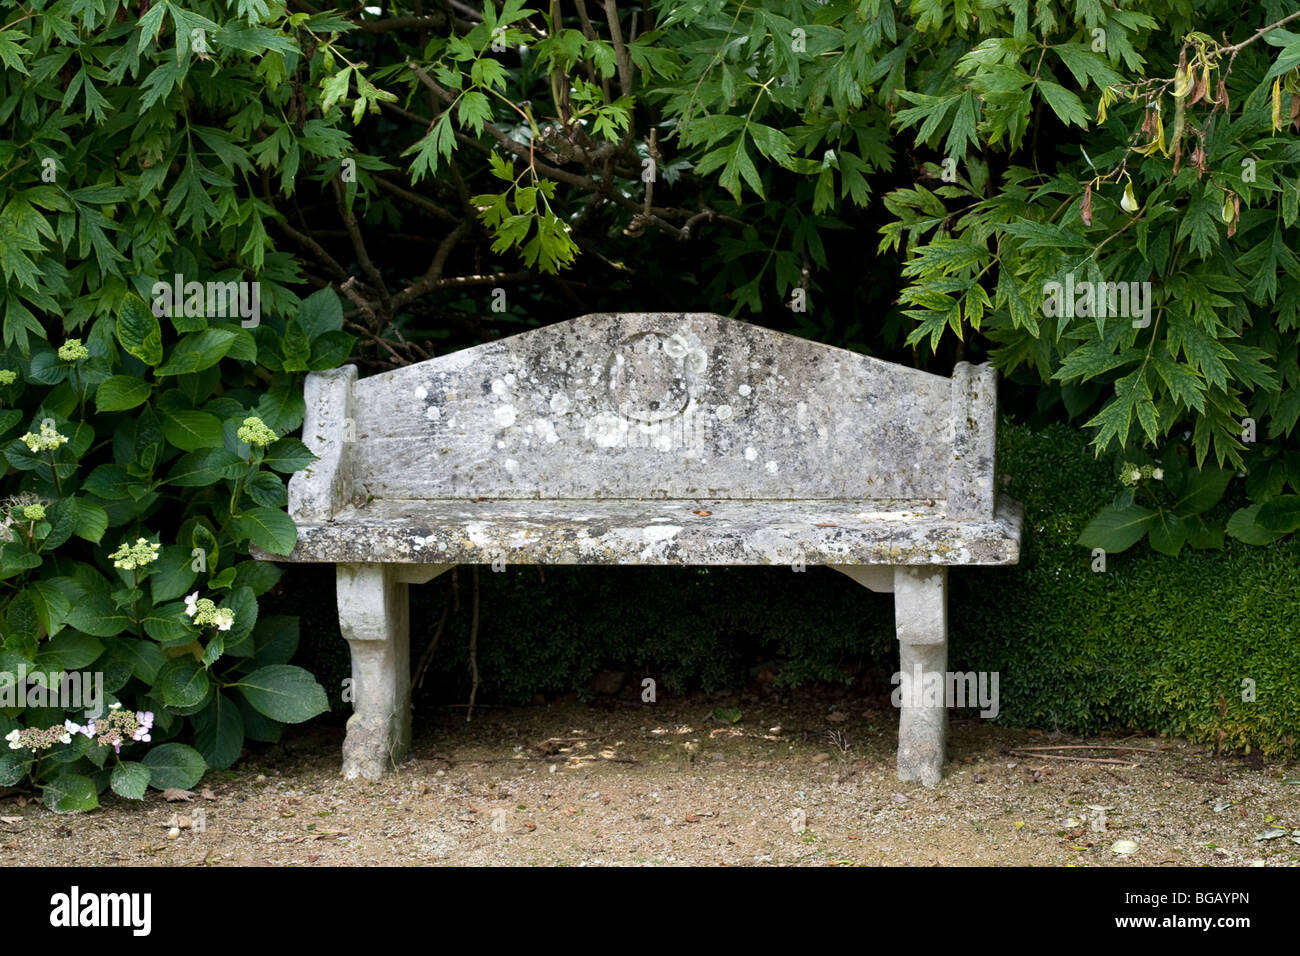 A stone bench at Trelissick Garden, Cornwall, England, UK Stock Photo